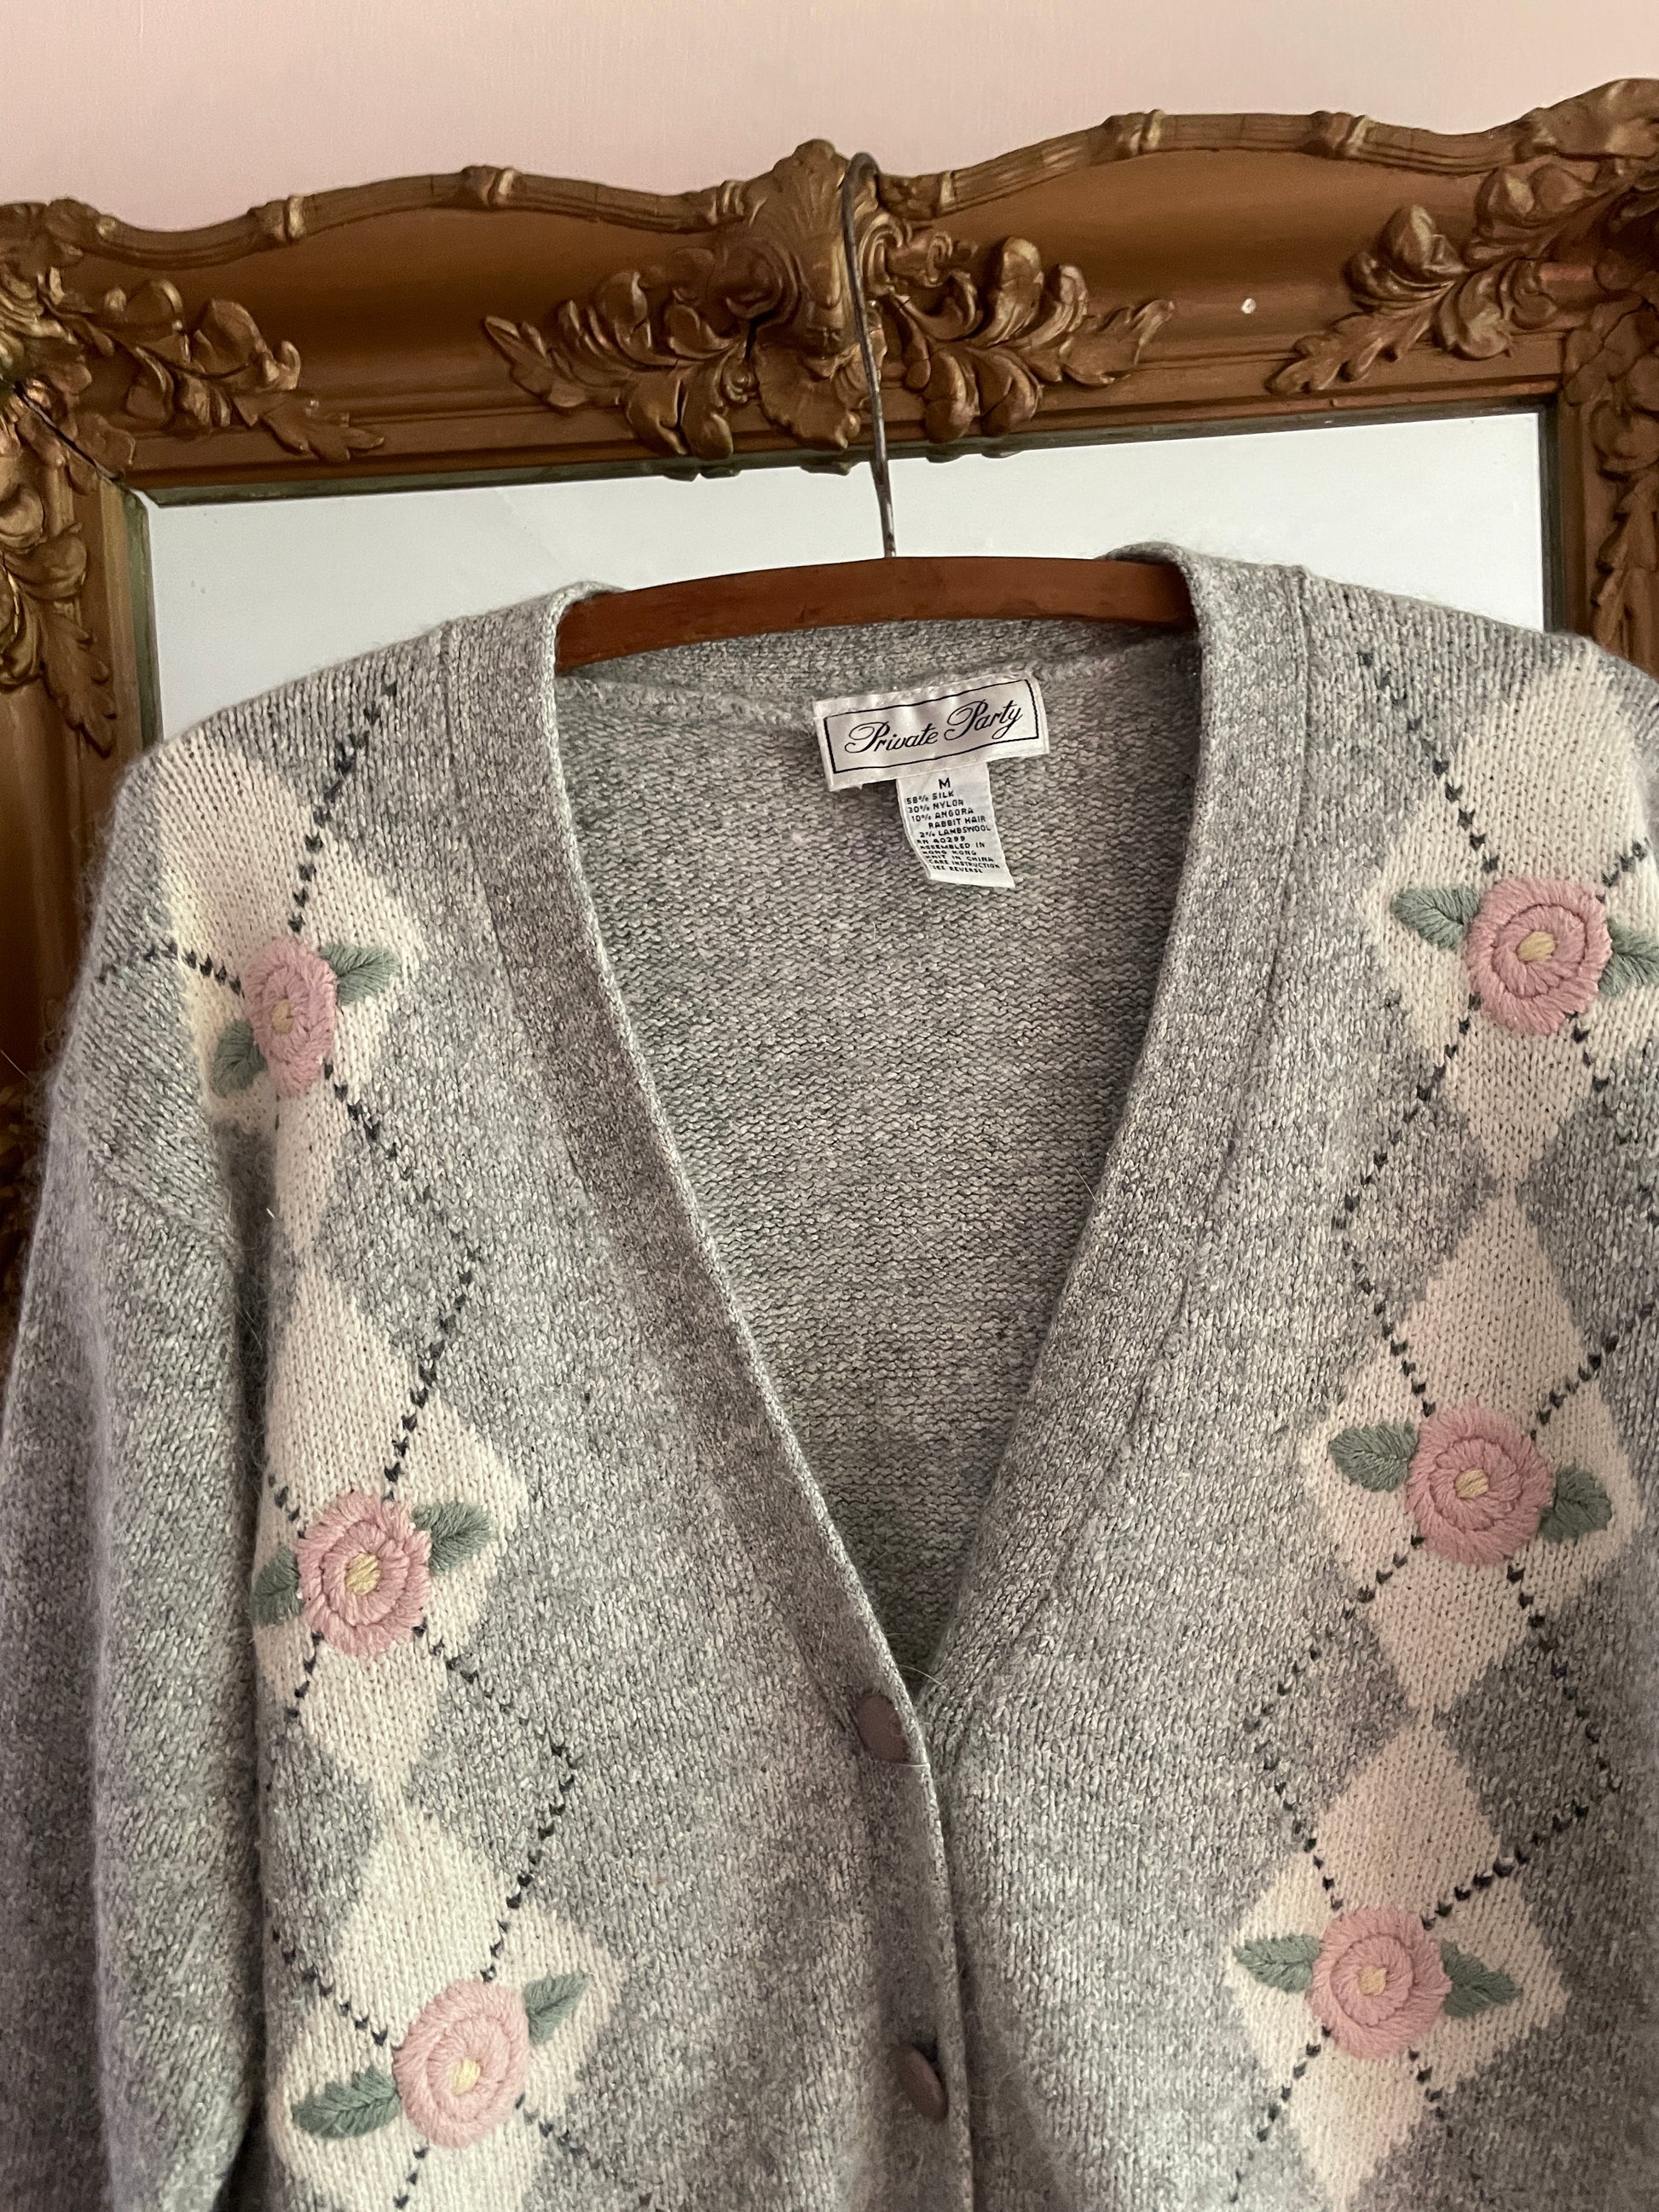  70s Vintage Silk Floral Design Gray Cardigan Sweater